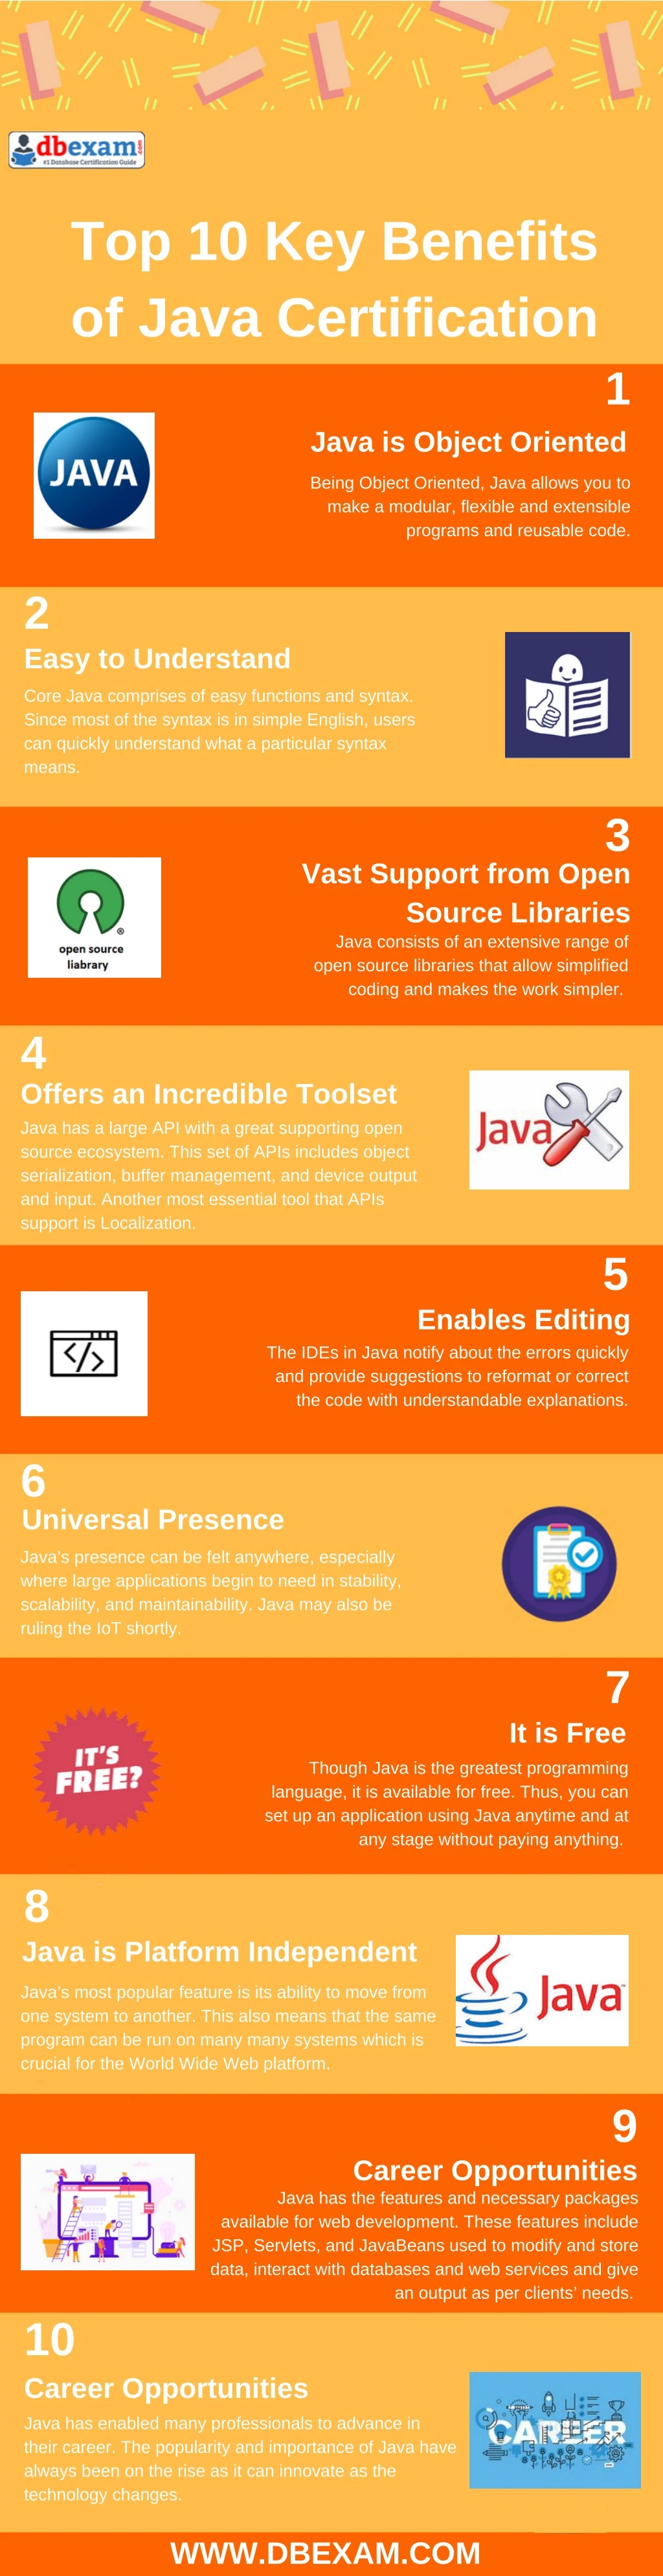 top 10 key benefits of java certification